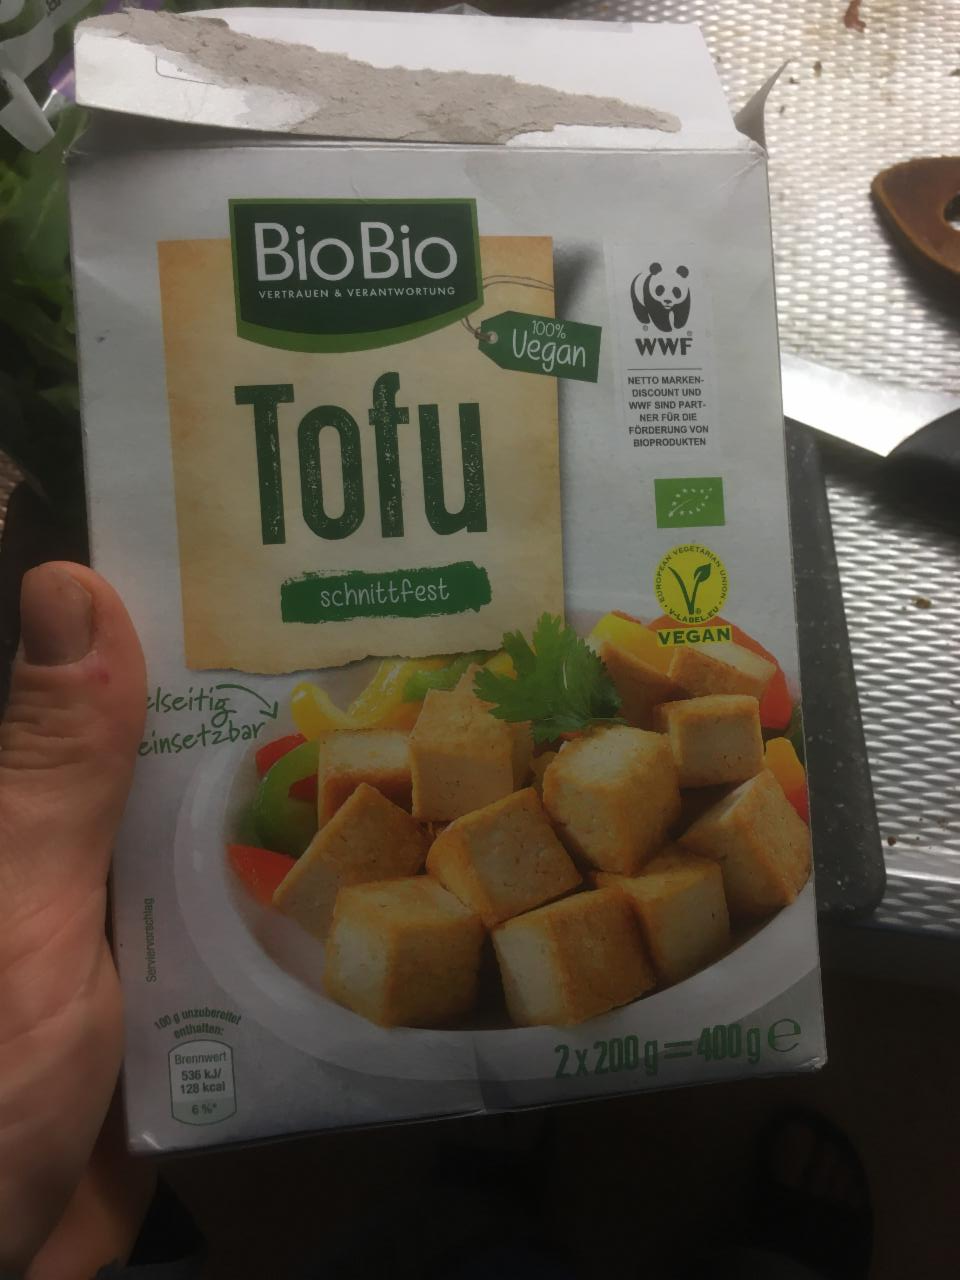 Fotografie - Tofu schnittfest